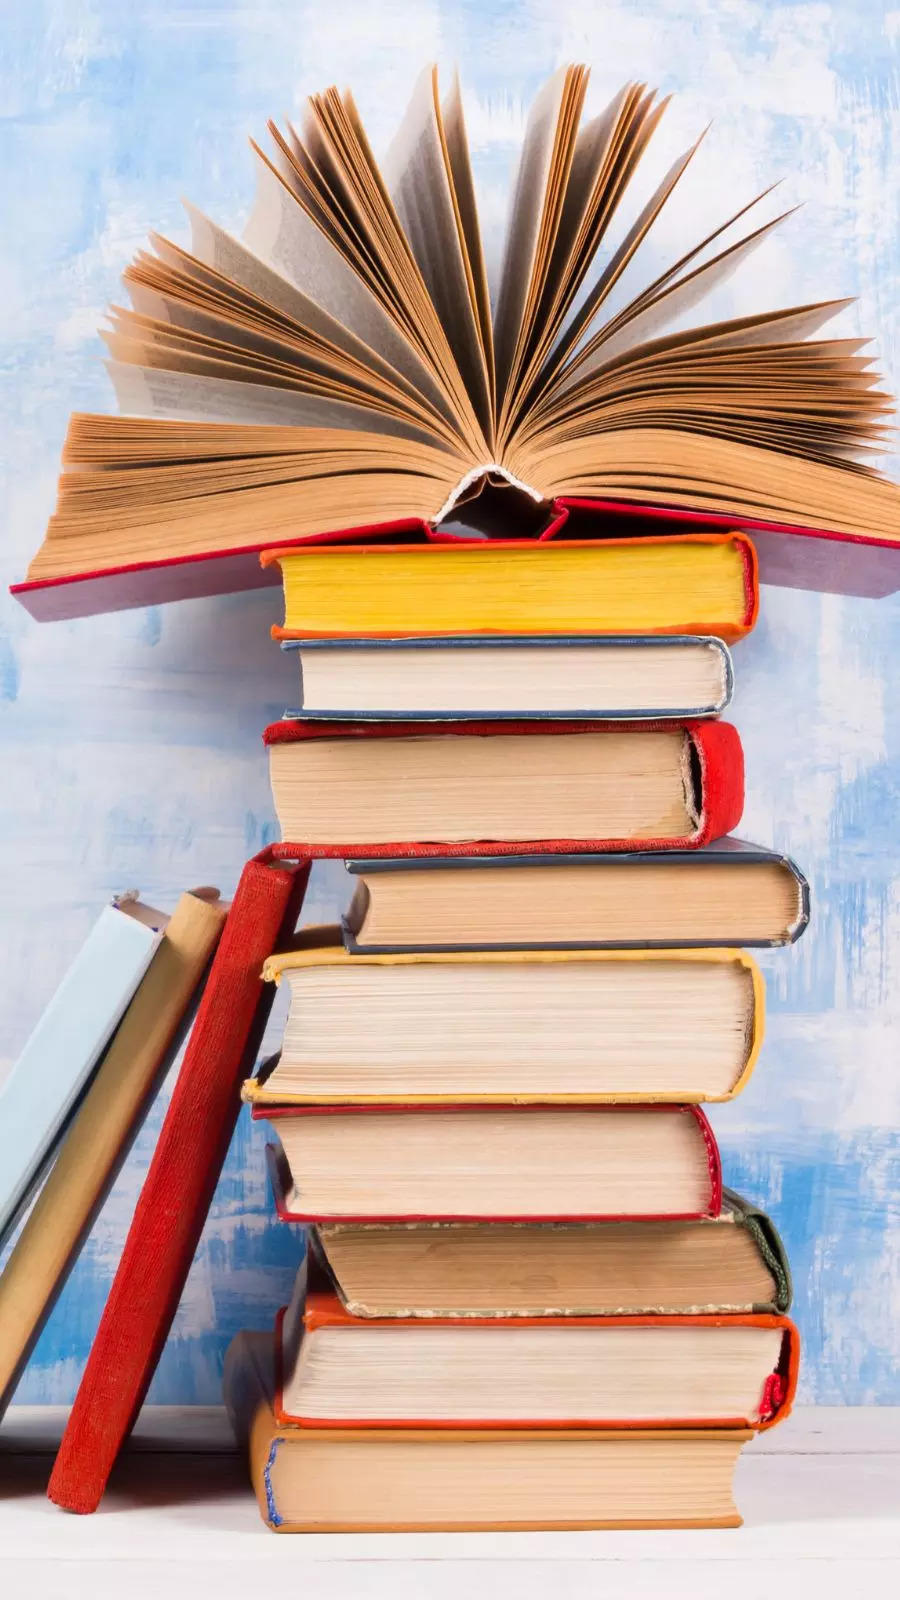 Top 10 Books to Improve English Vocabulary